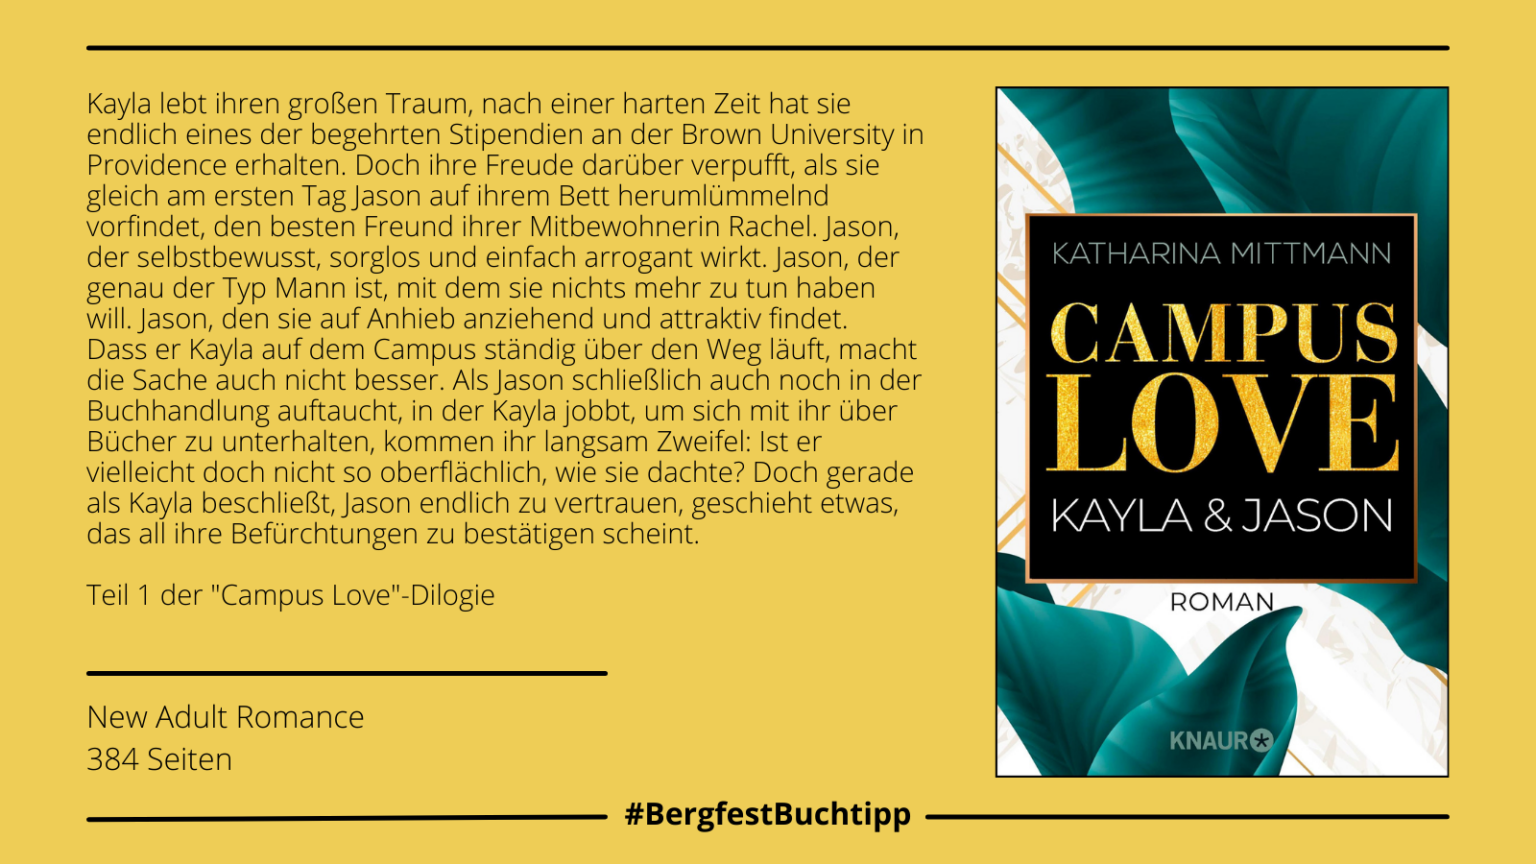 Woche 27: "Campus Love: Kayla & Jason" von Katharina Mittmann